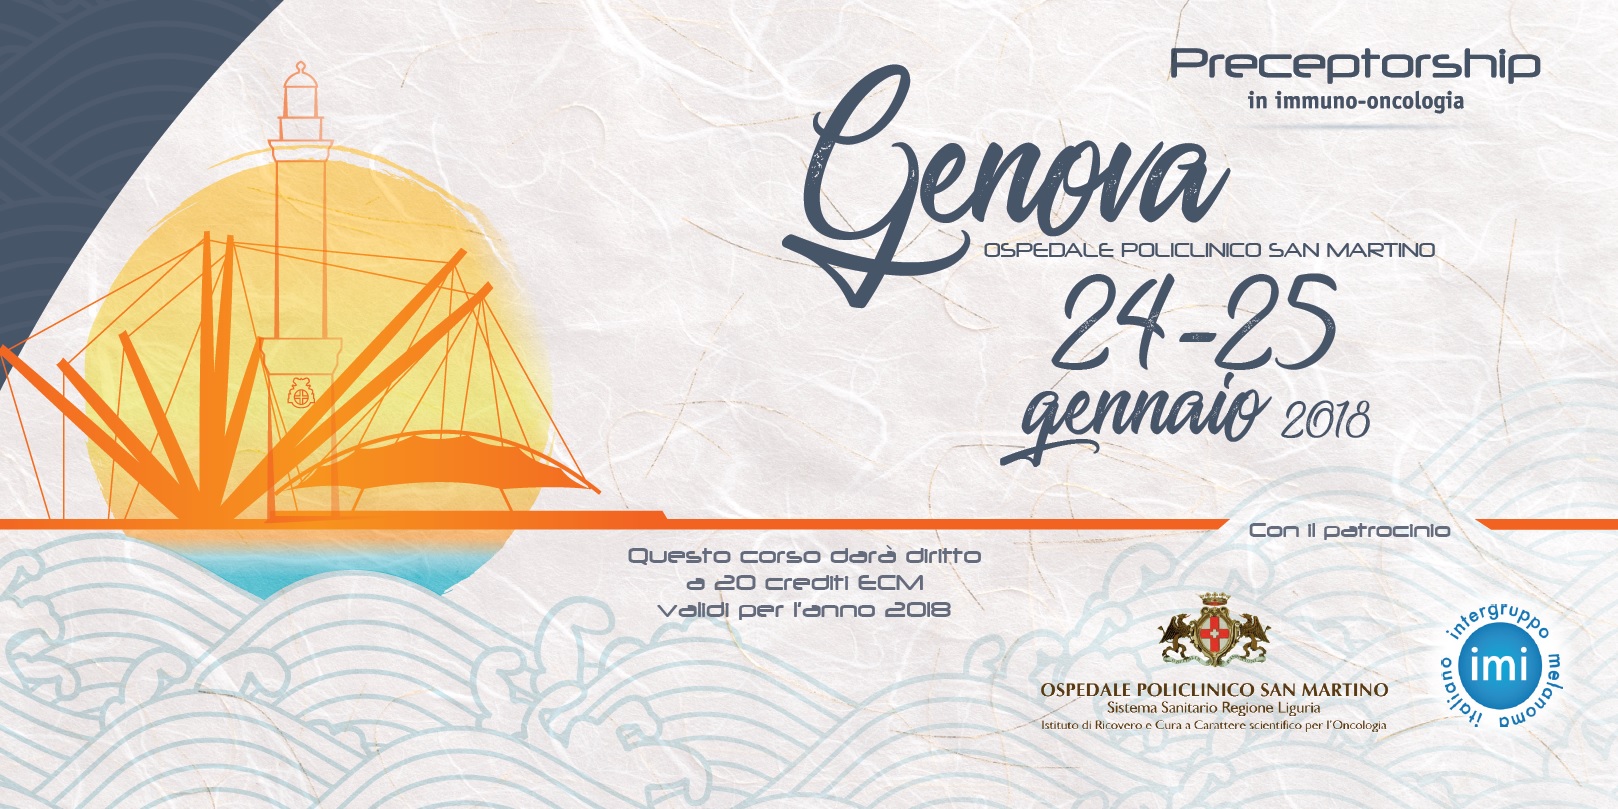 Preceptorship Genova 24 25.01.2018